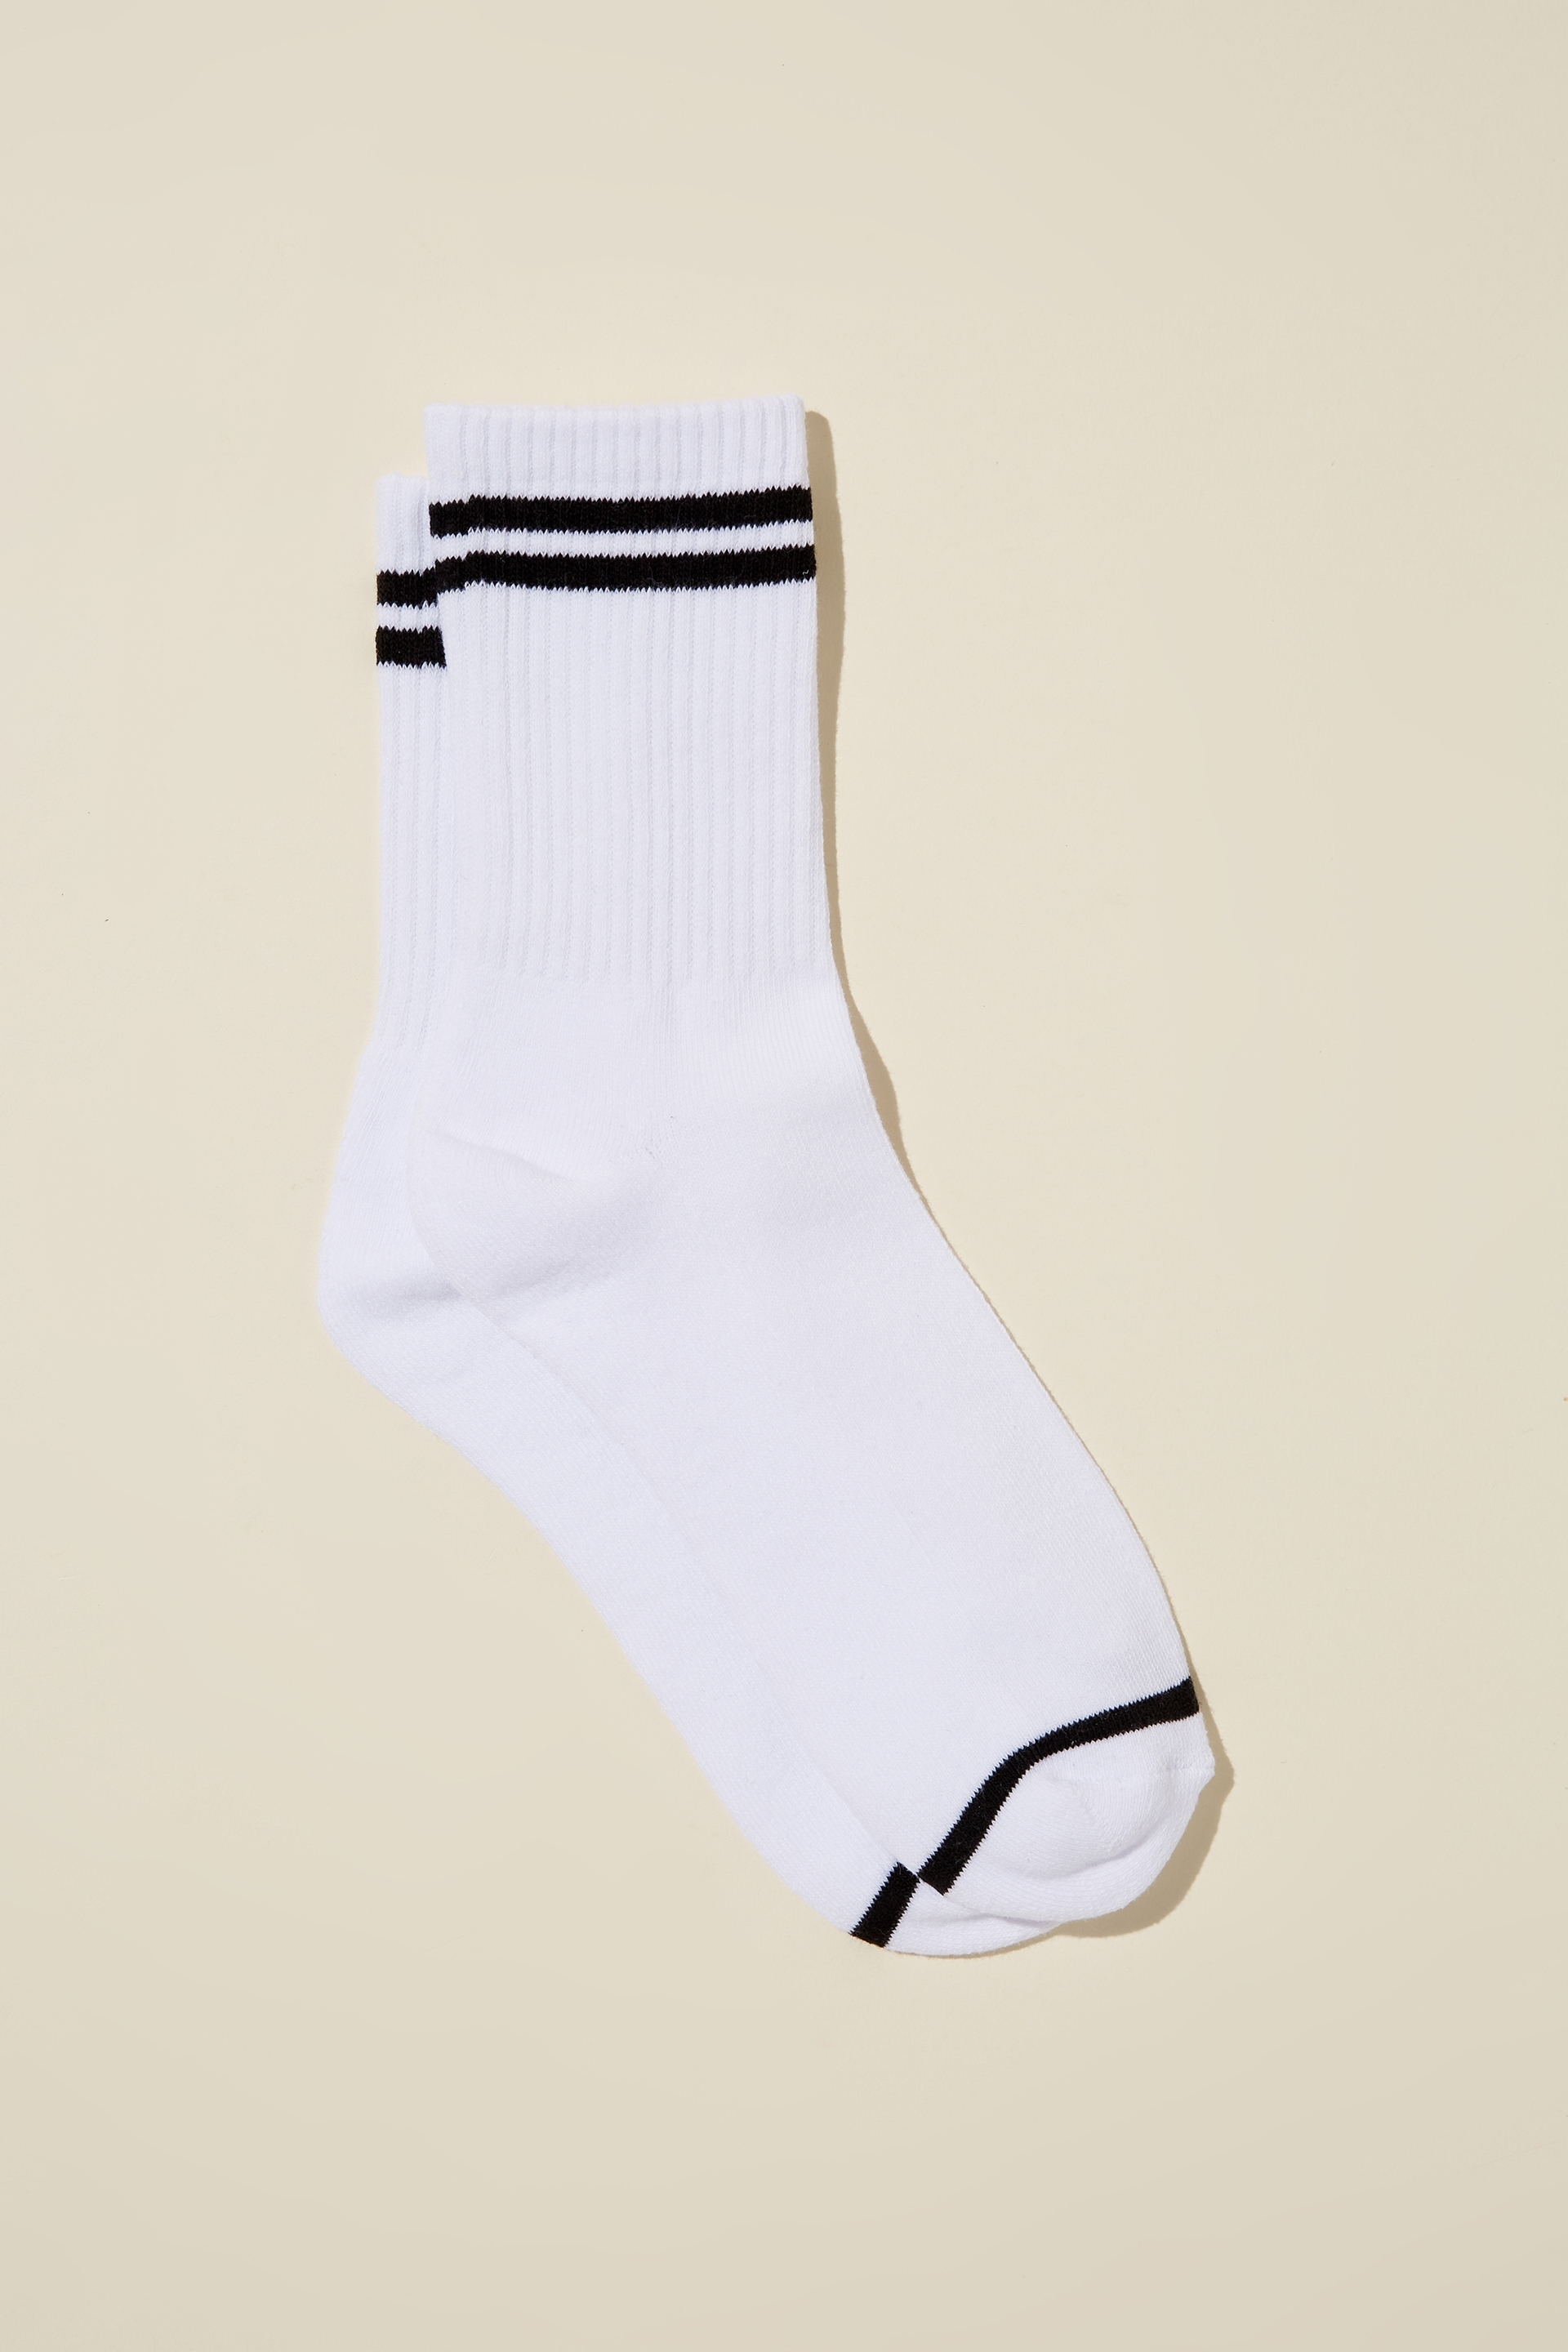 Rubi - Club House Crew Sock - White/black stripe